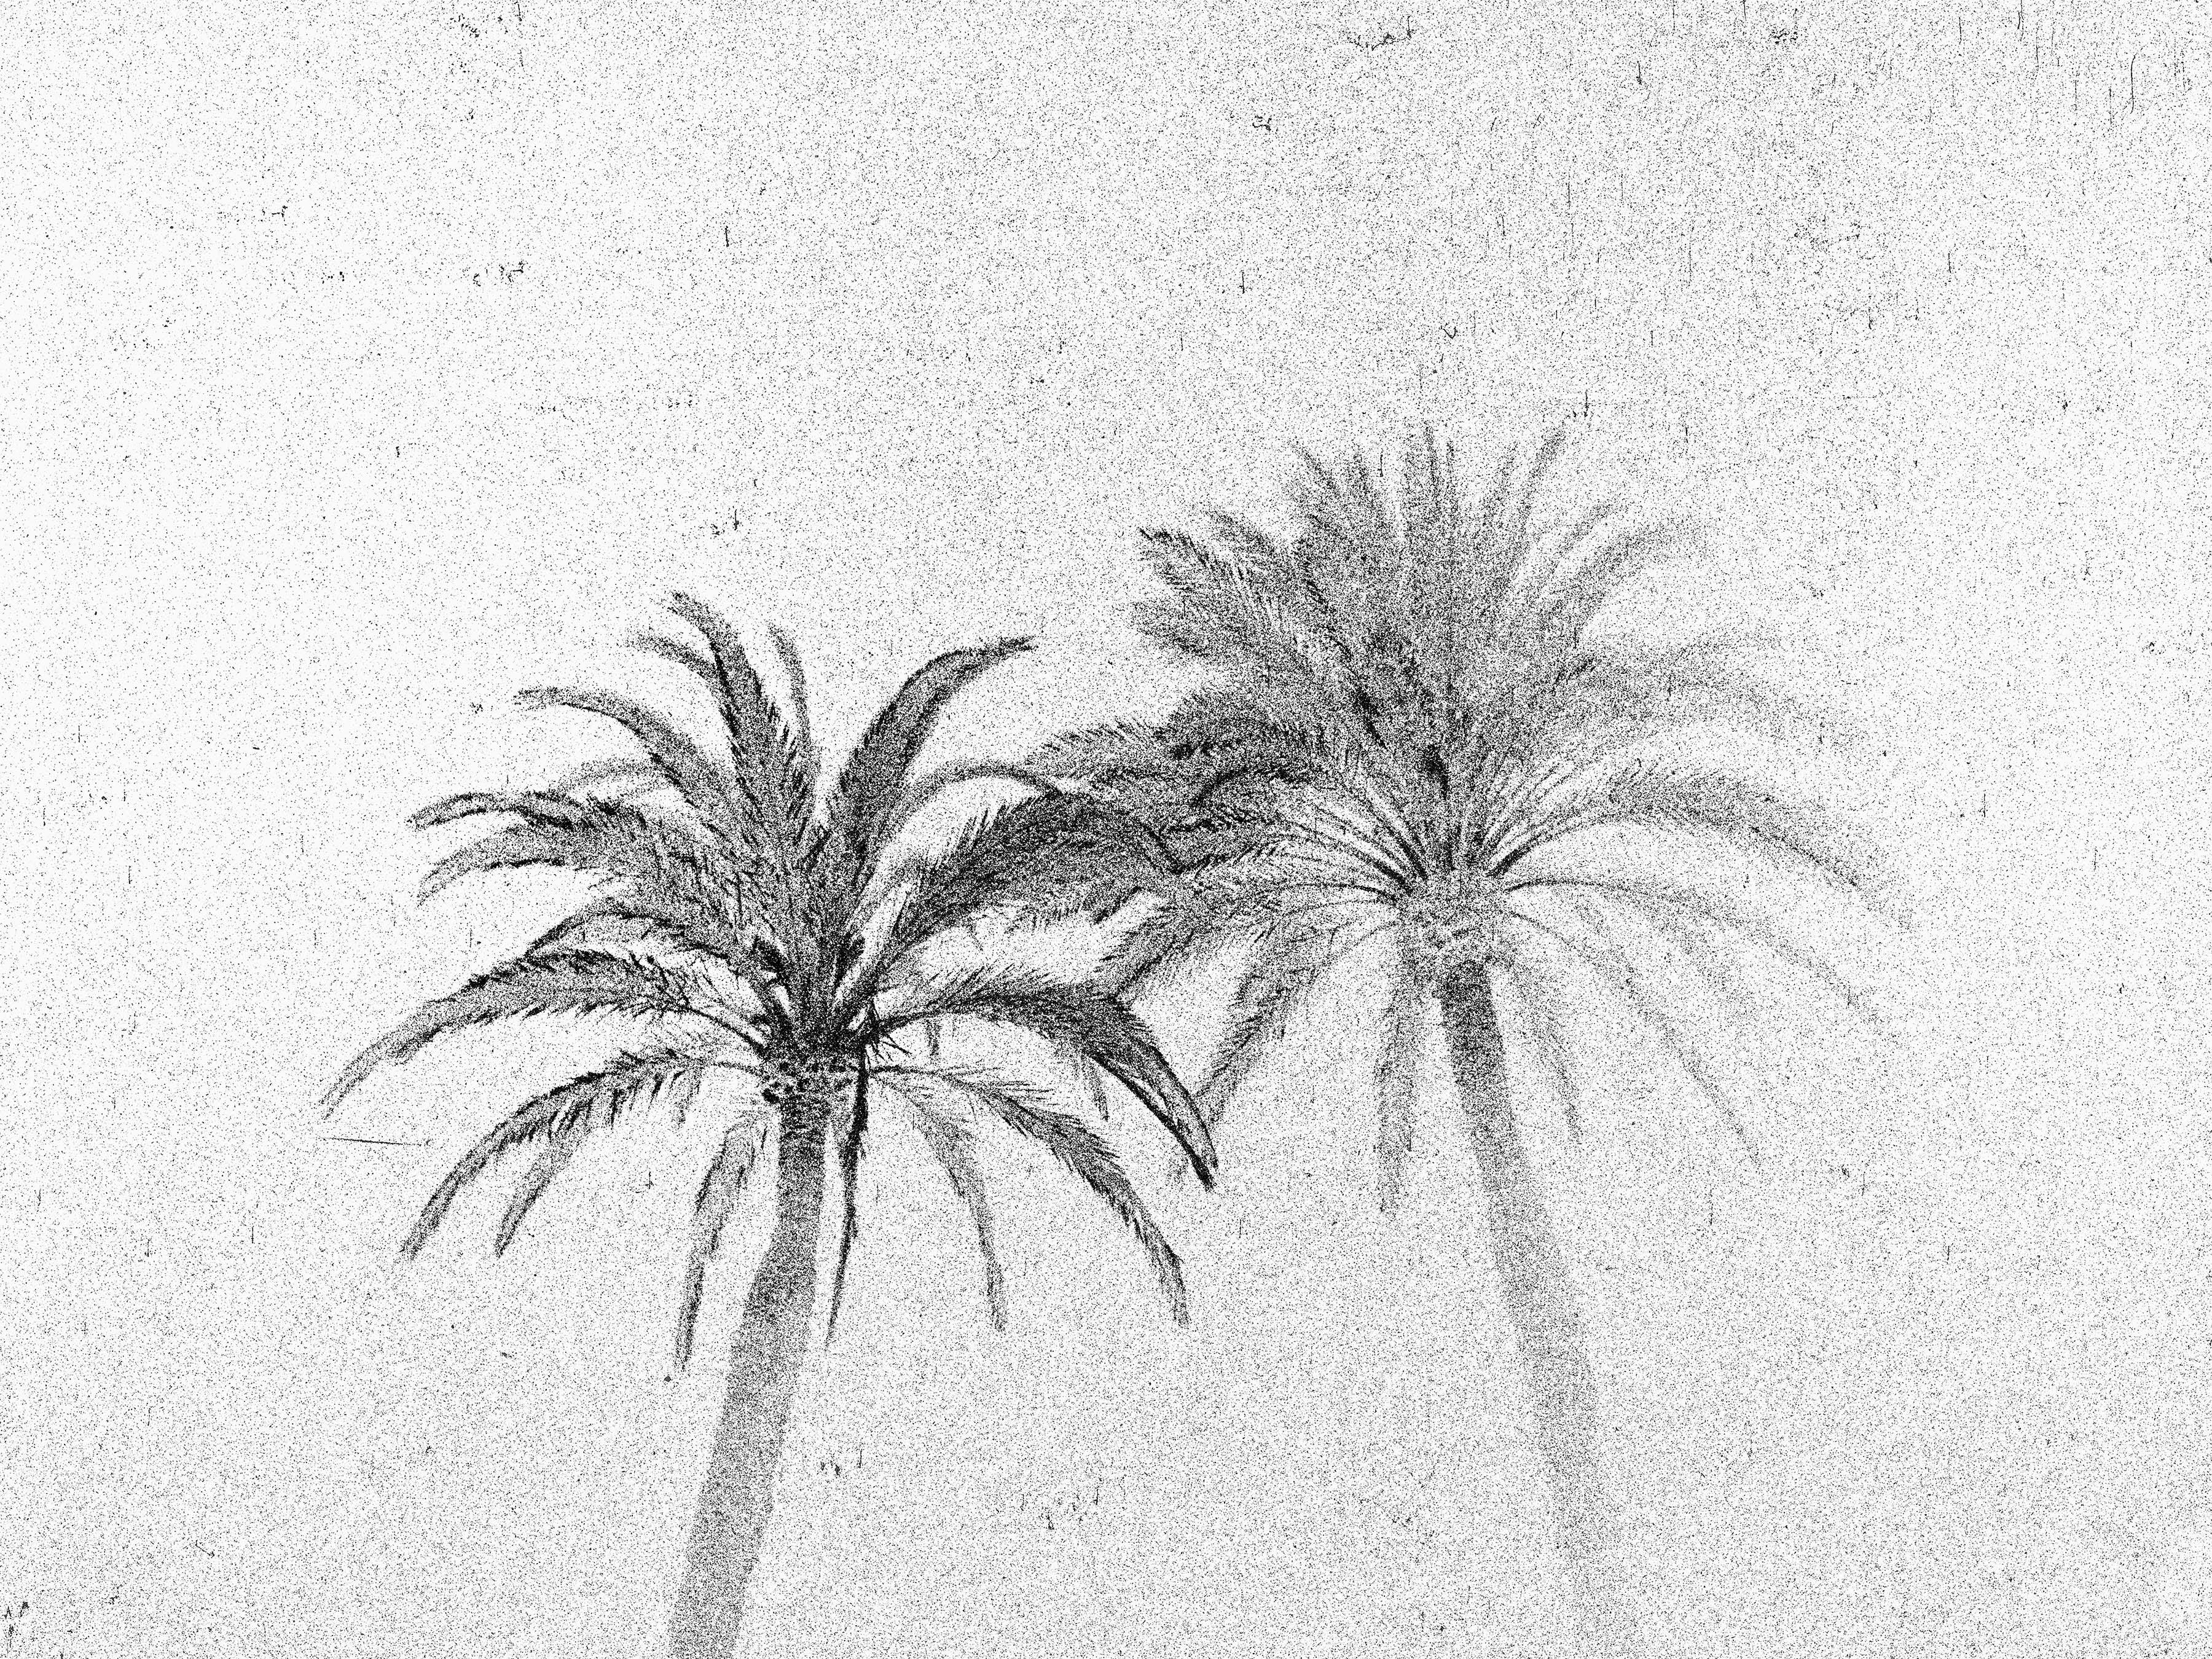 Osheen Harruthoonyan Black and White Photograph - Evening Palms, Summer Showers, Barcelona - black and white photo, palms trees